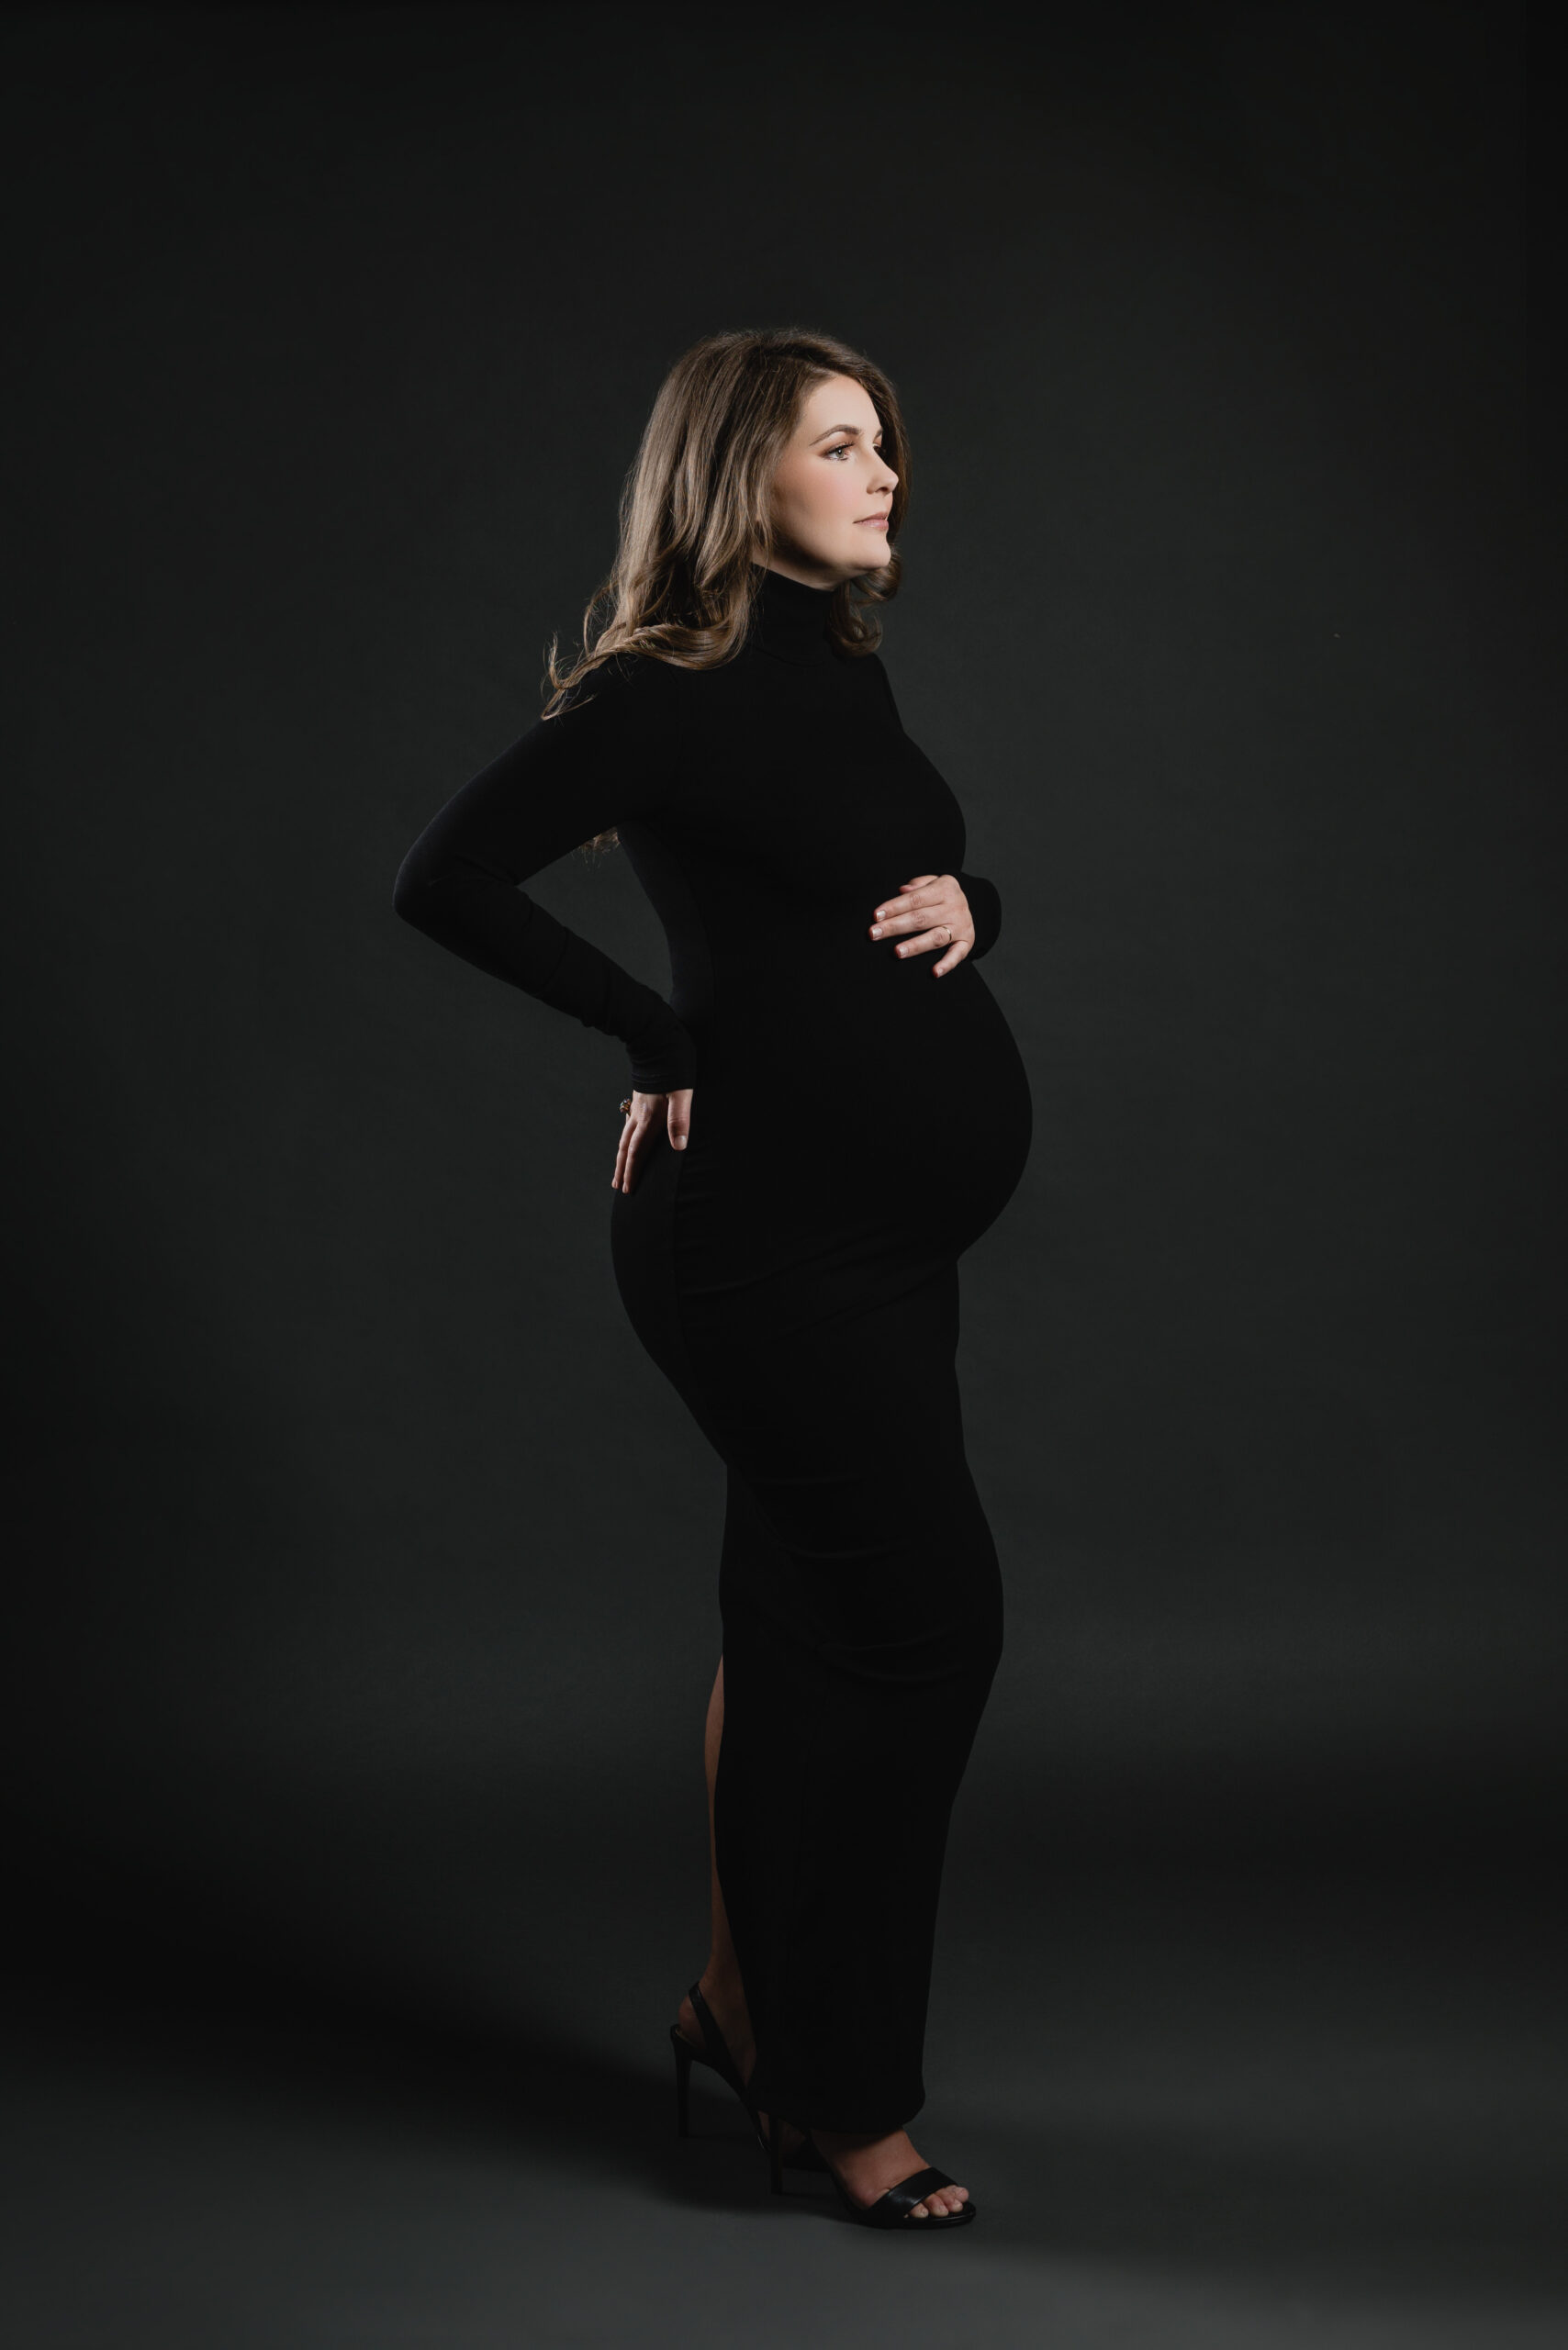 Maternity photography, Jacksonville FL, Carolennys Studios, Fine Art Maternity Photography, Studio Photography, Black sleek tutle neck maternity dress